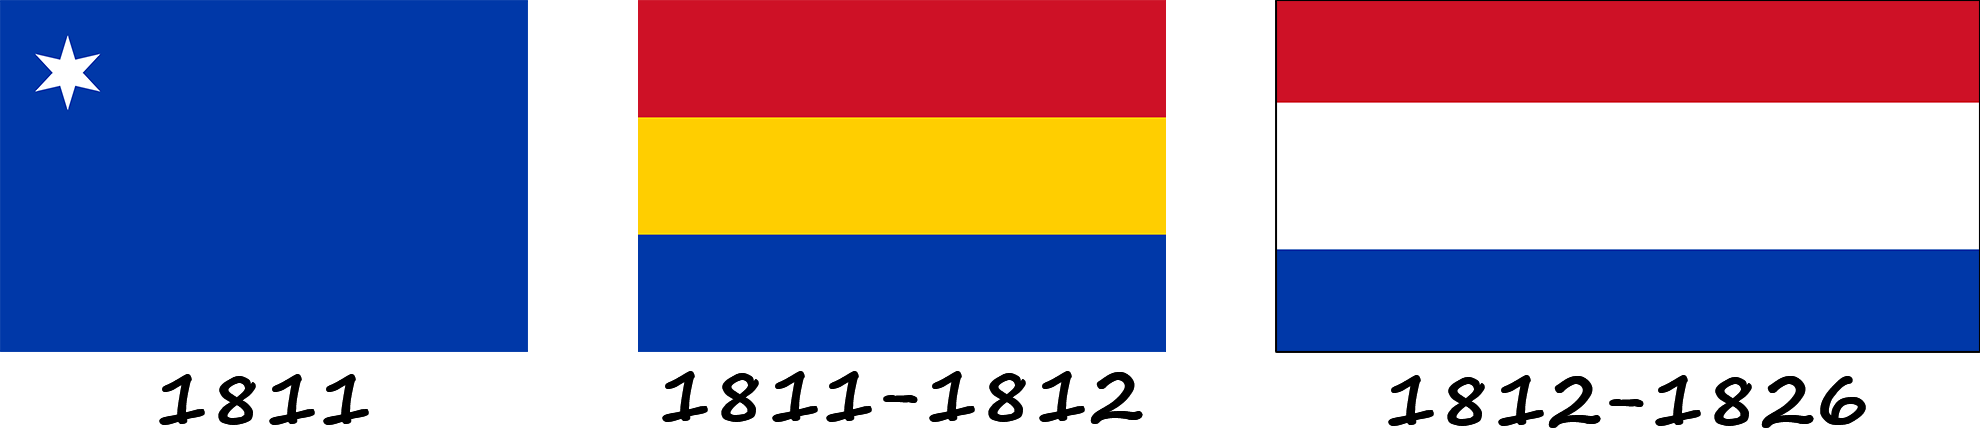 Історія прапора Парагваю